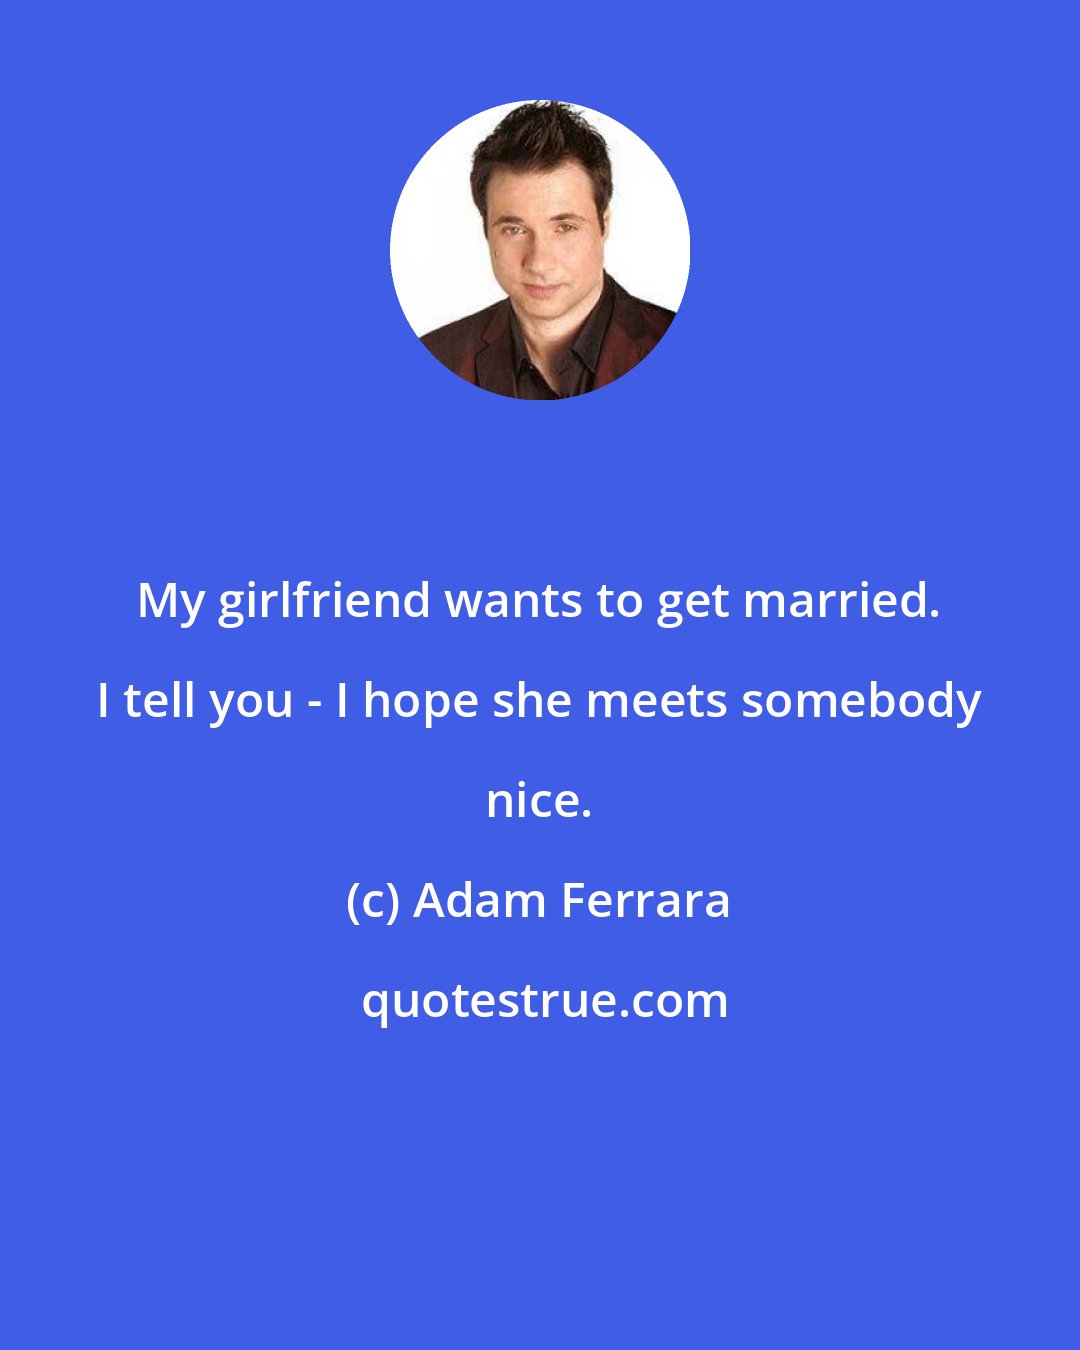 Adam Ferrara: My girlfriend wants to get married. I tell you - I hope she meets somebody nice.